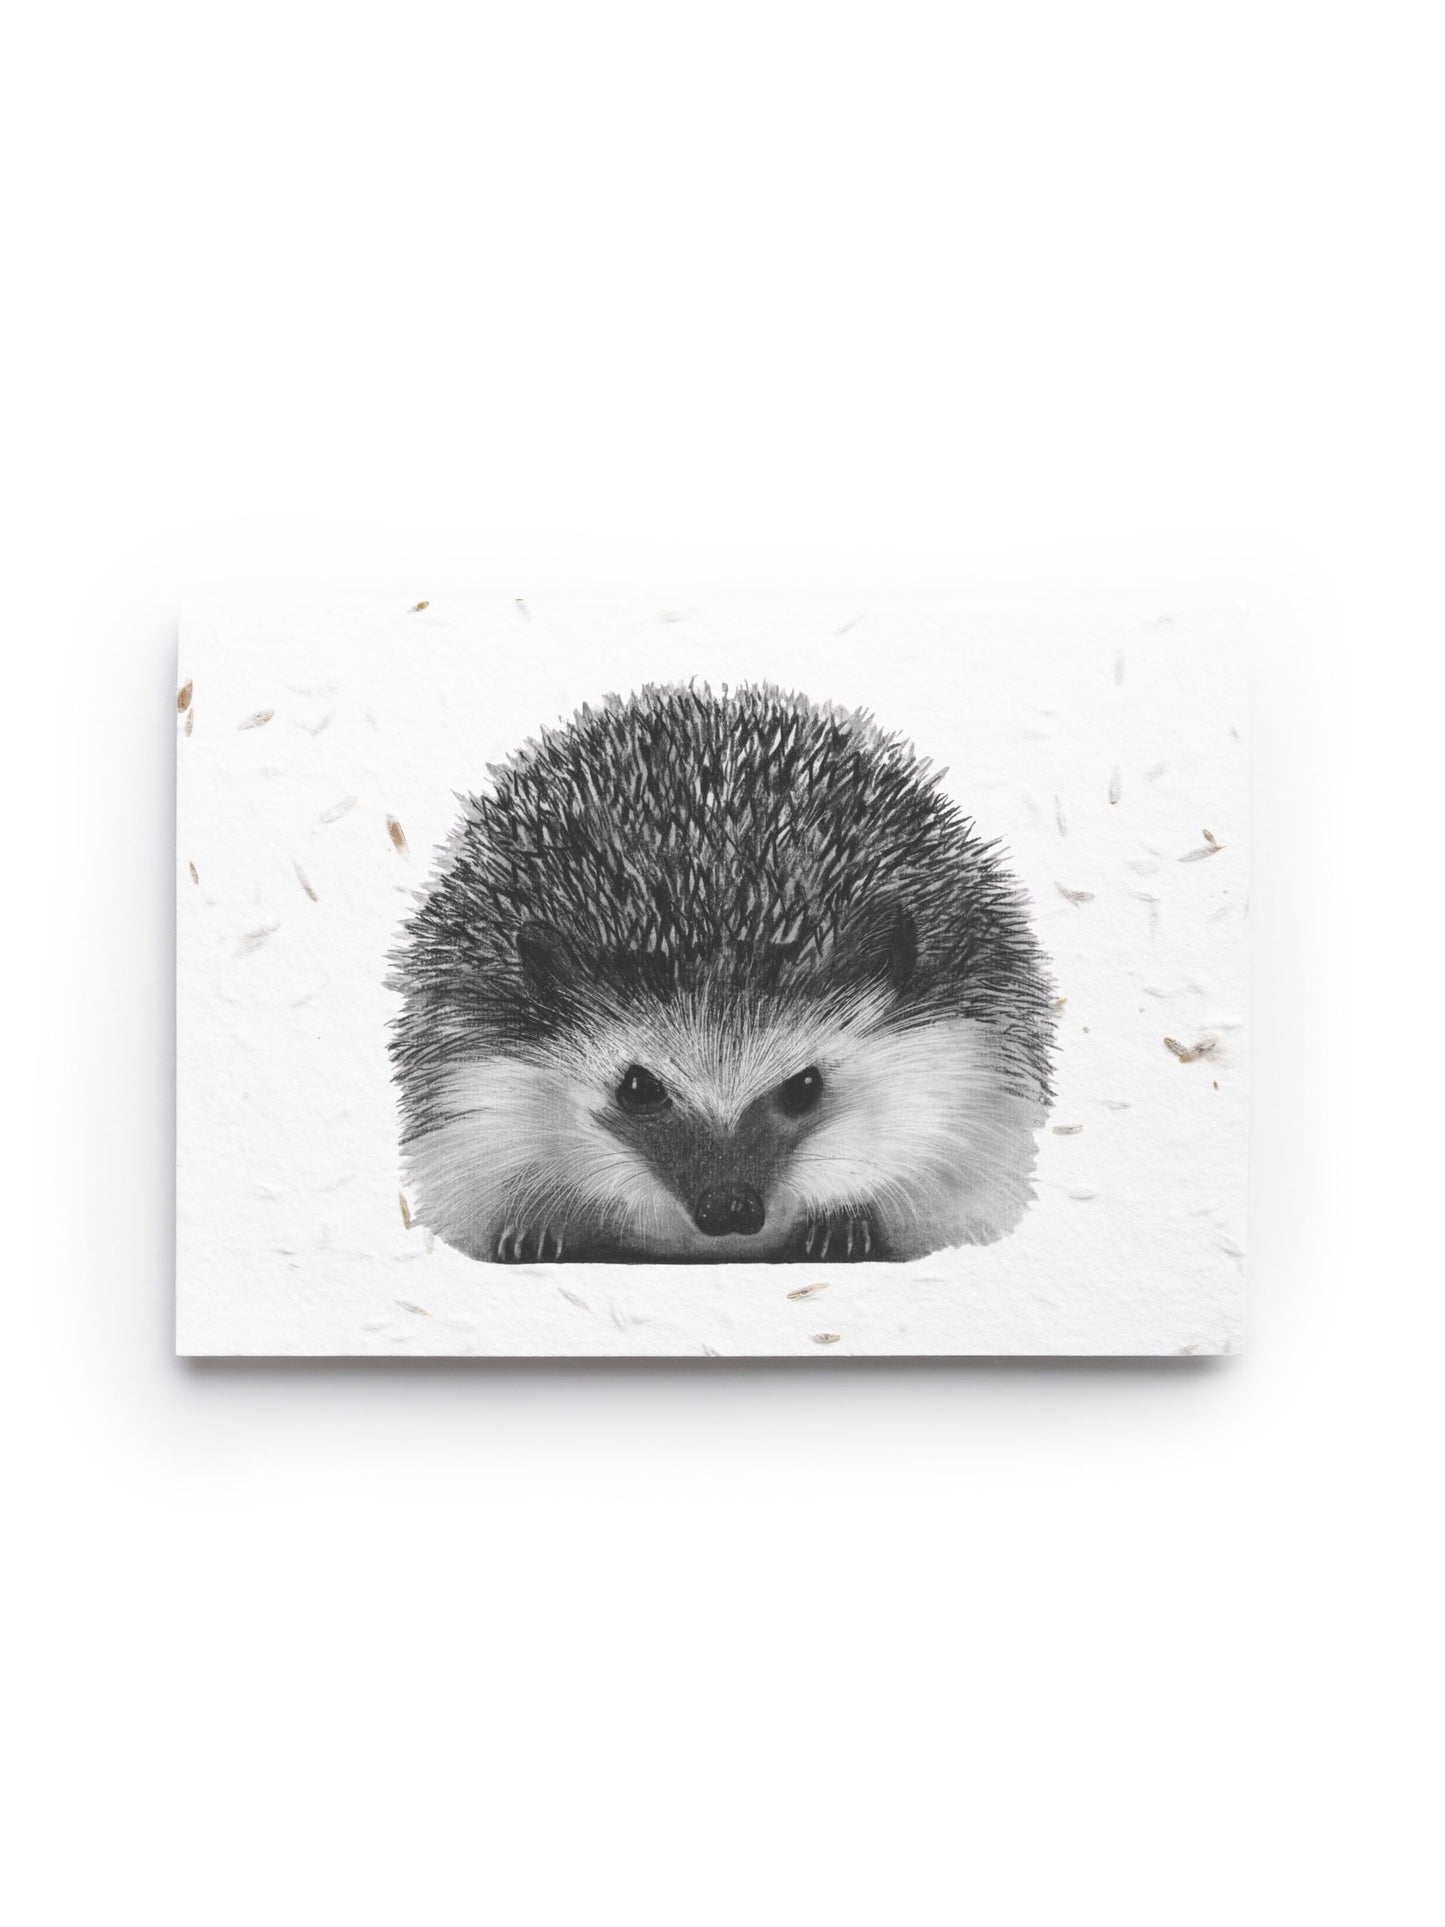 Persei the Hedgehog Seed Card